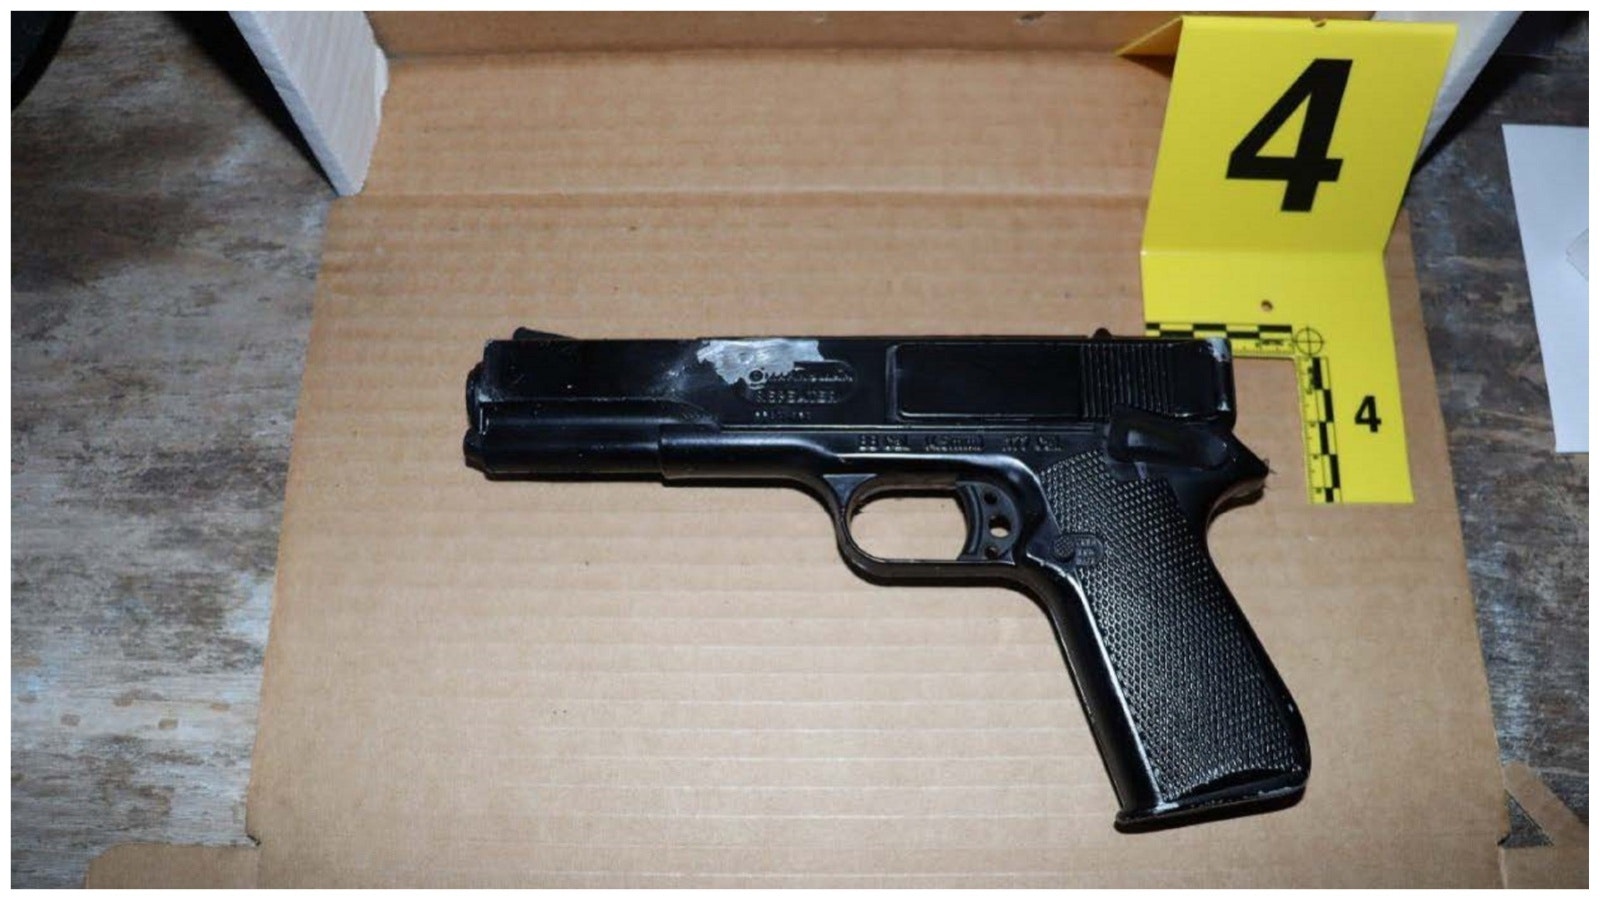 The BB pistol a Bureau of Indian Affairs agent mistook for a handgun during an Aug. 11, 2022 fatal officer-involved shooting